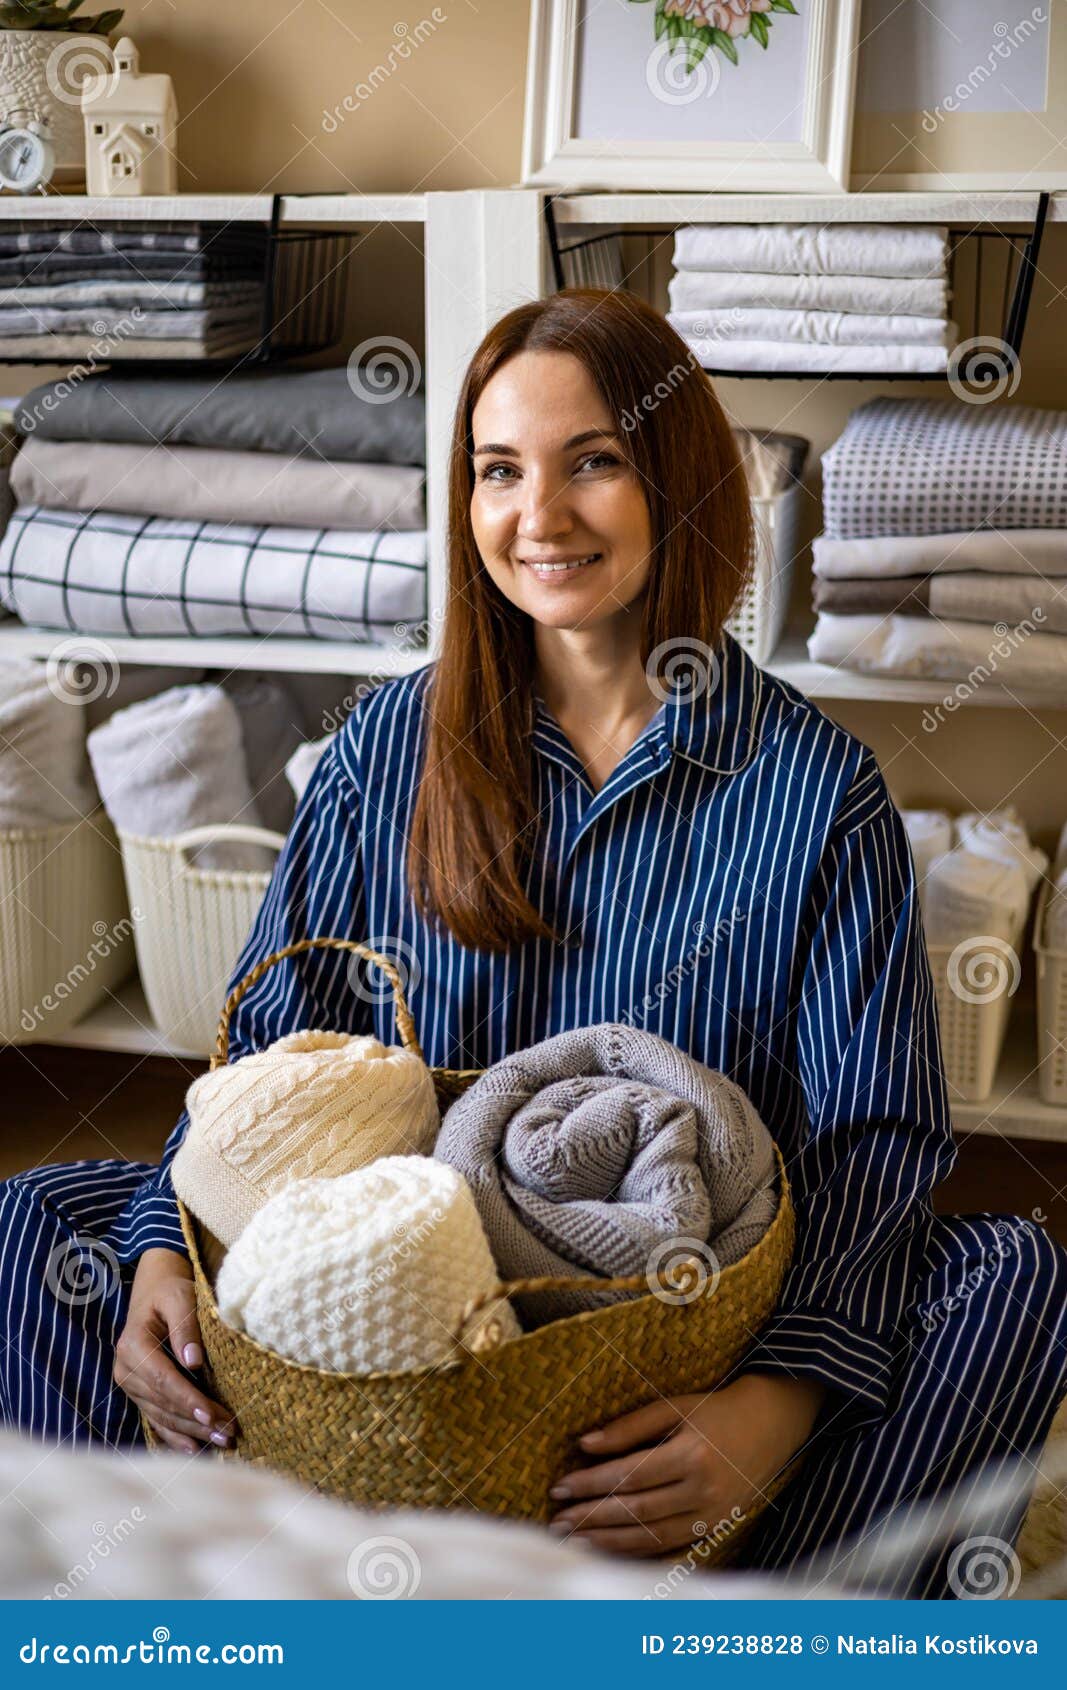 https://thumbs.dreamstime.com/z/portrait-happy-young-domestic-woman-pajamas-posing-straw-basket-linens-storage-use-marie-kondo-method-smiling-239238828.jpg